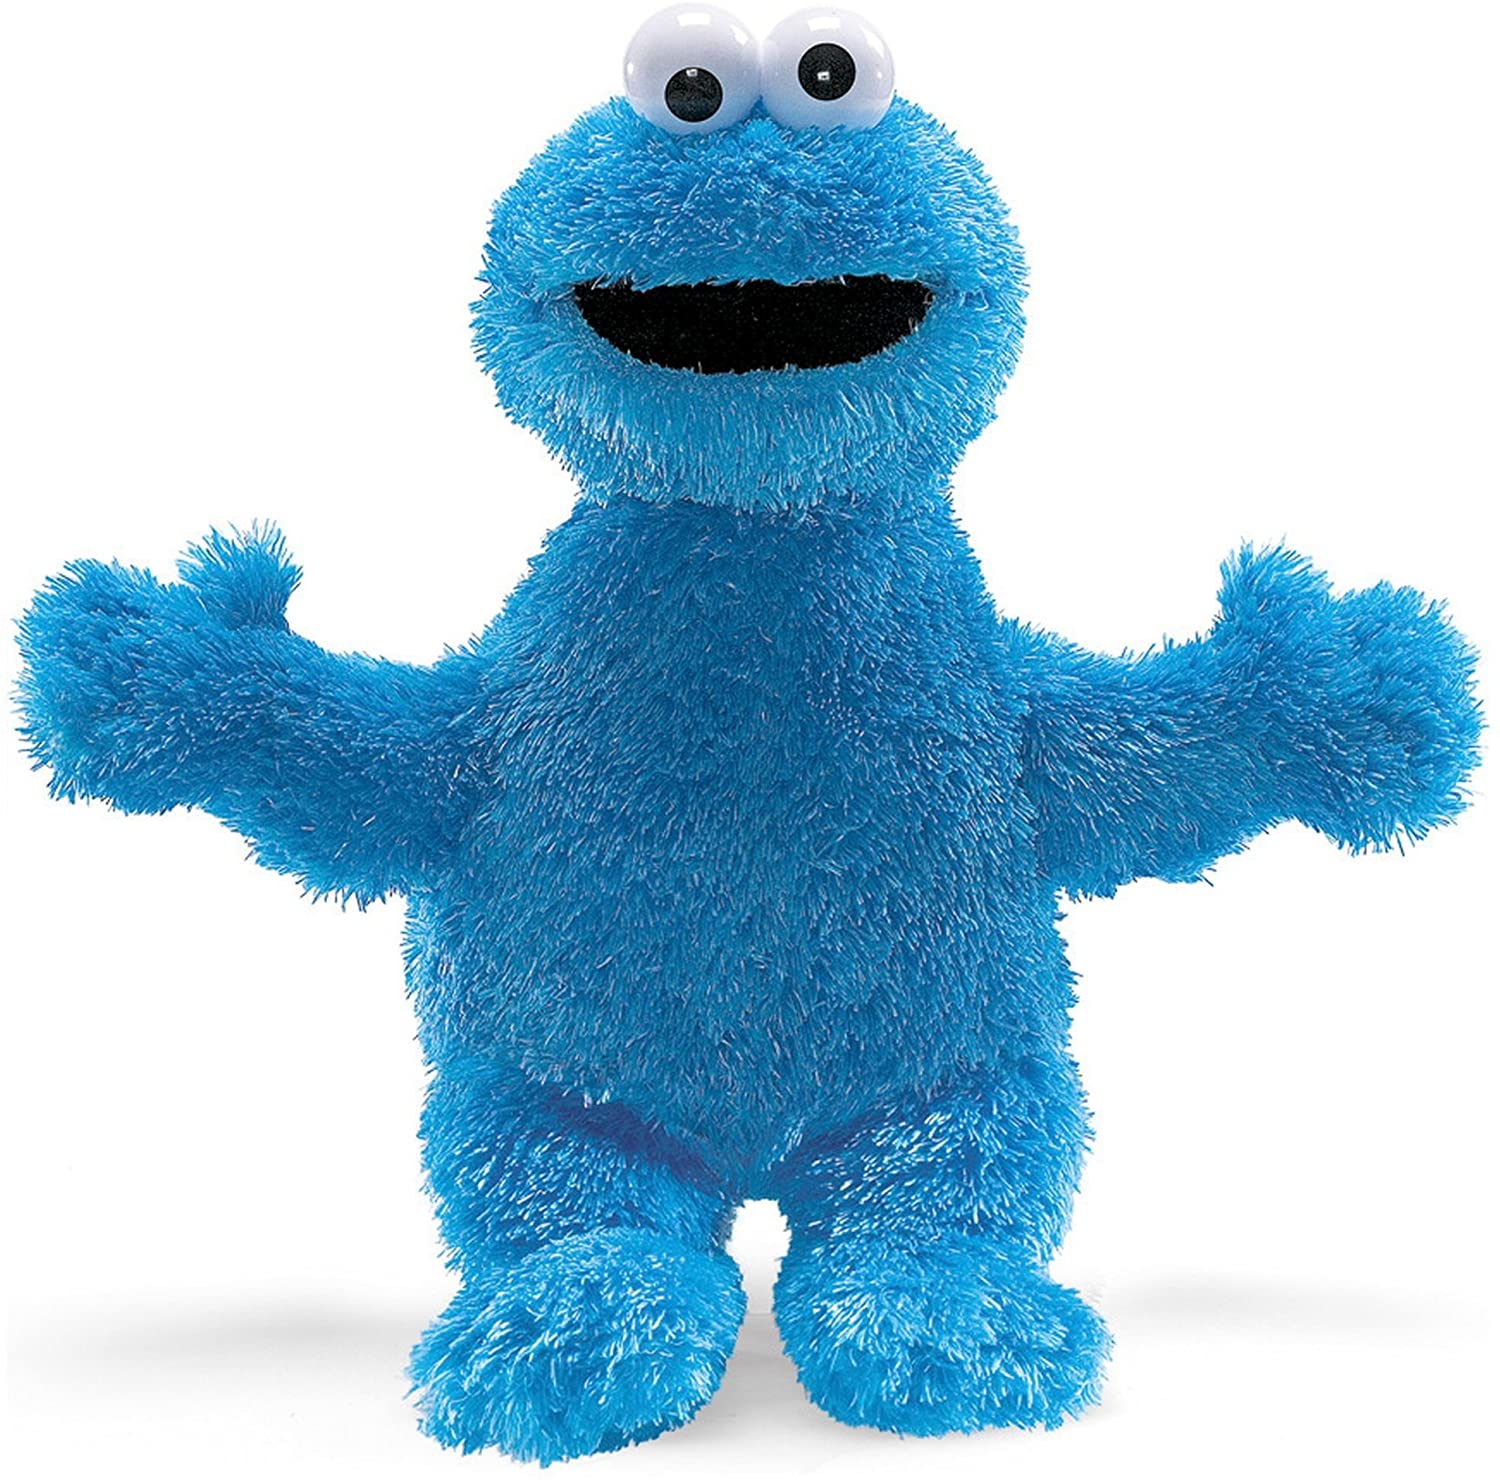 Cookie Monster Plush - JKA Toys